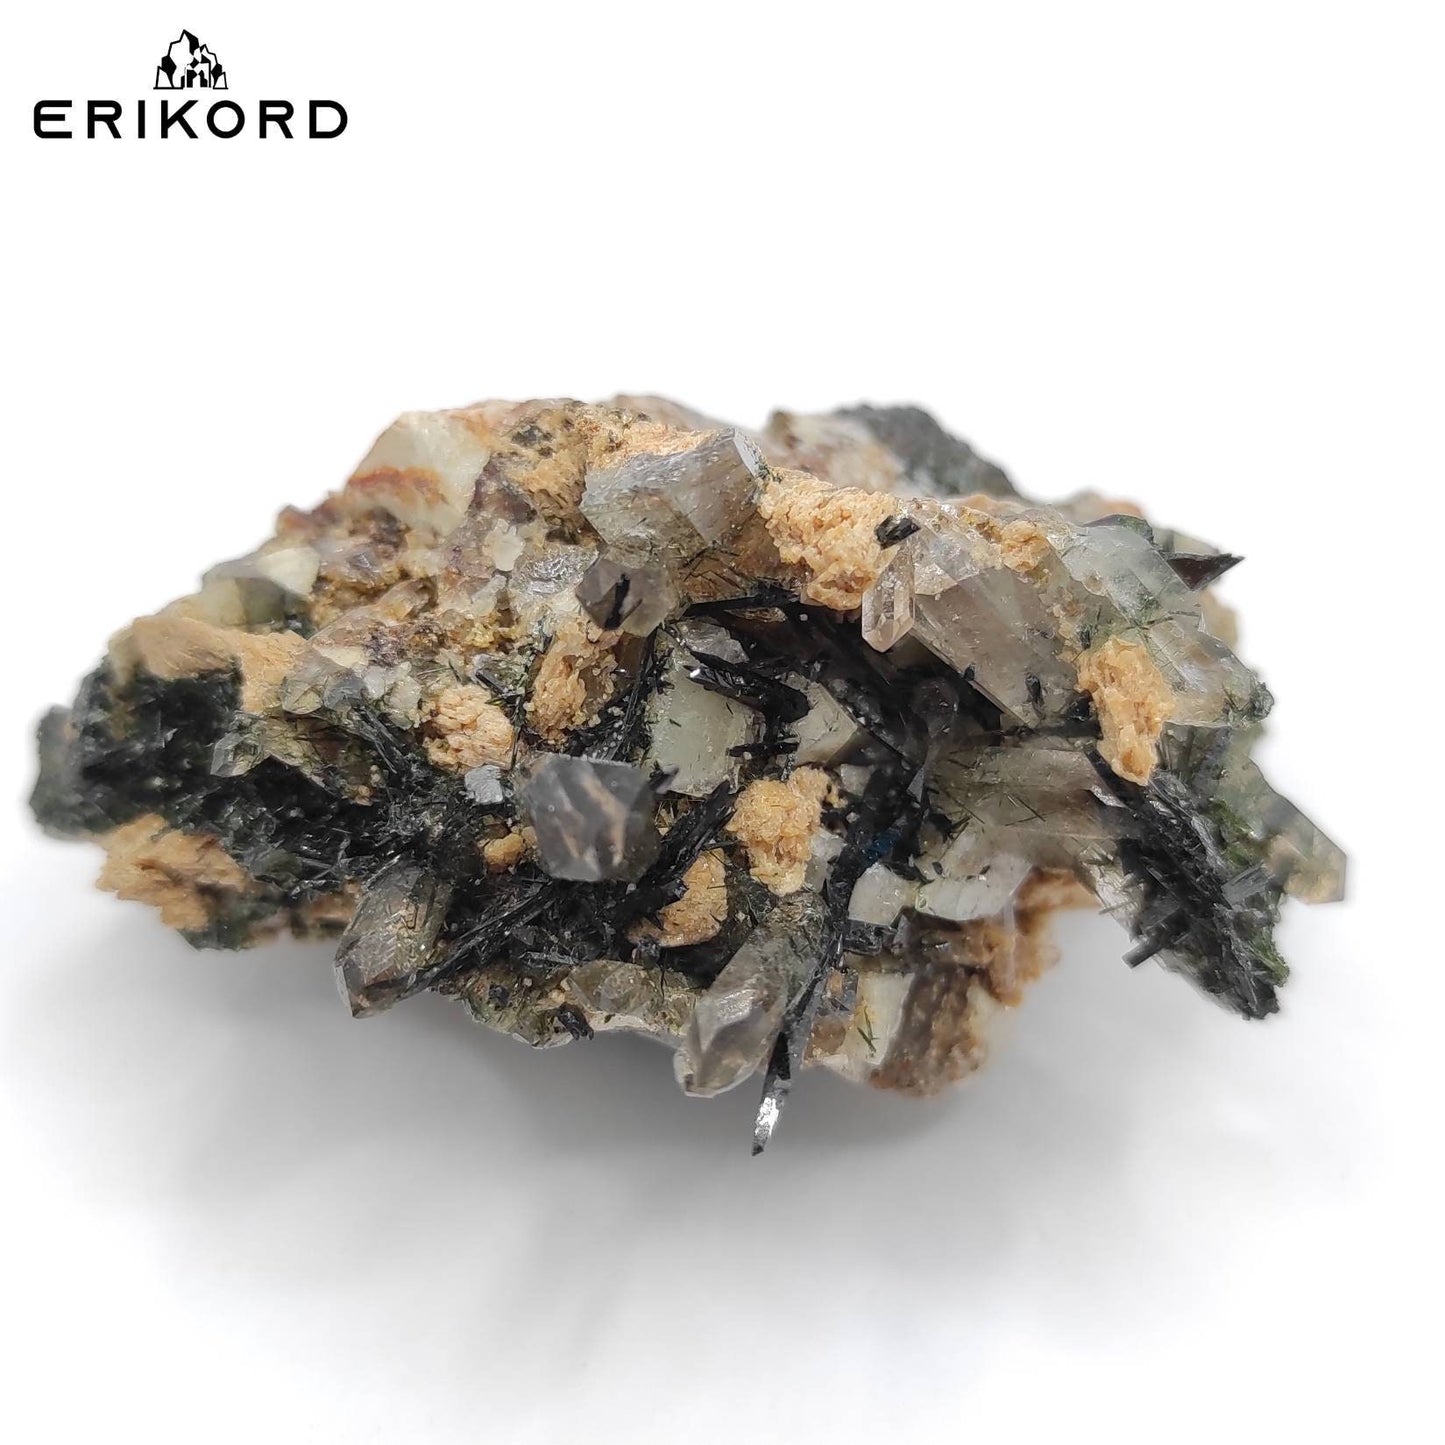 54g Smoky Quartz with Aegerine and Feldspar Natural Mineral Cluster Malawi Raw Black Aegerine Specimen Unique Crystal Cluster Rough Minerals